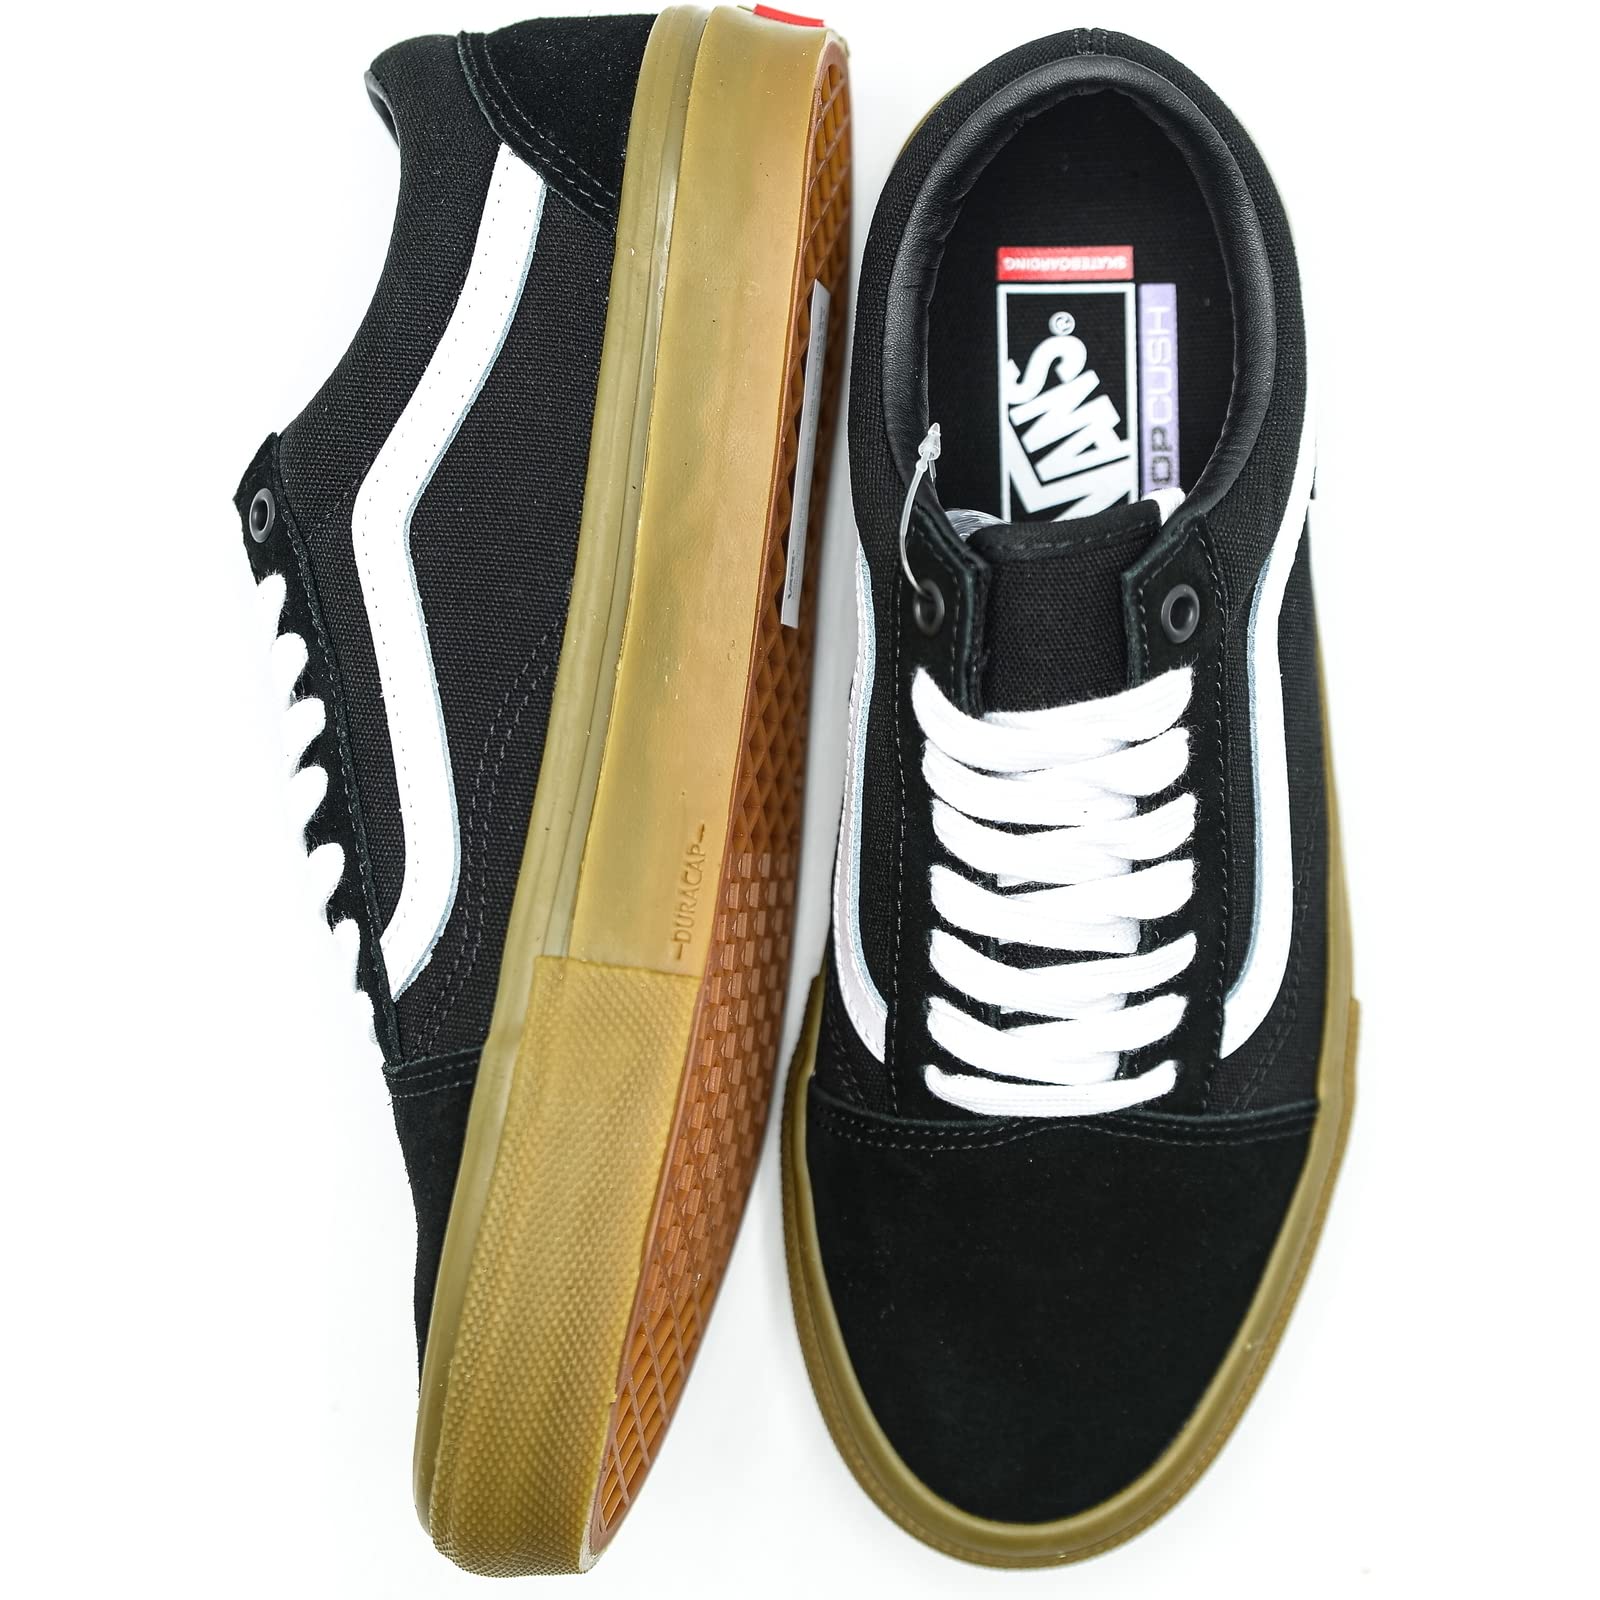 Vans Men's Skate Old Skool Sneaker, Black/Gum, Size 11.5